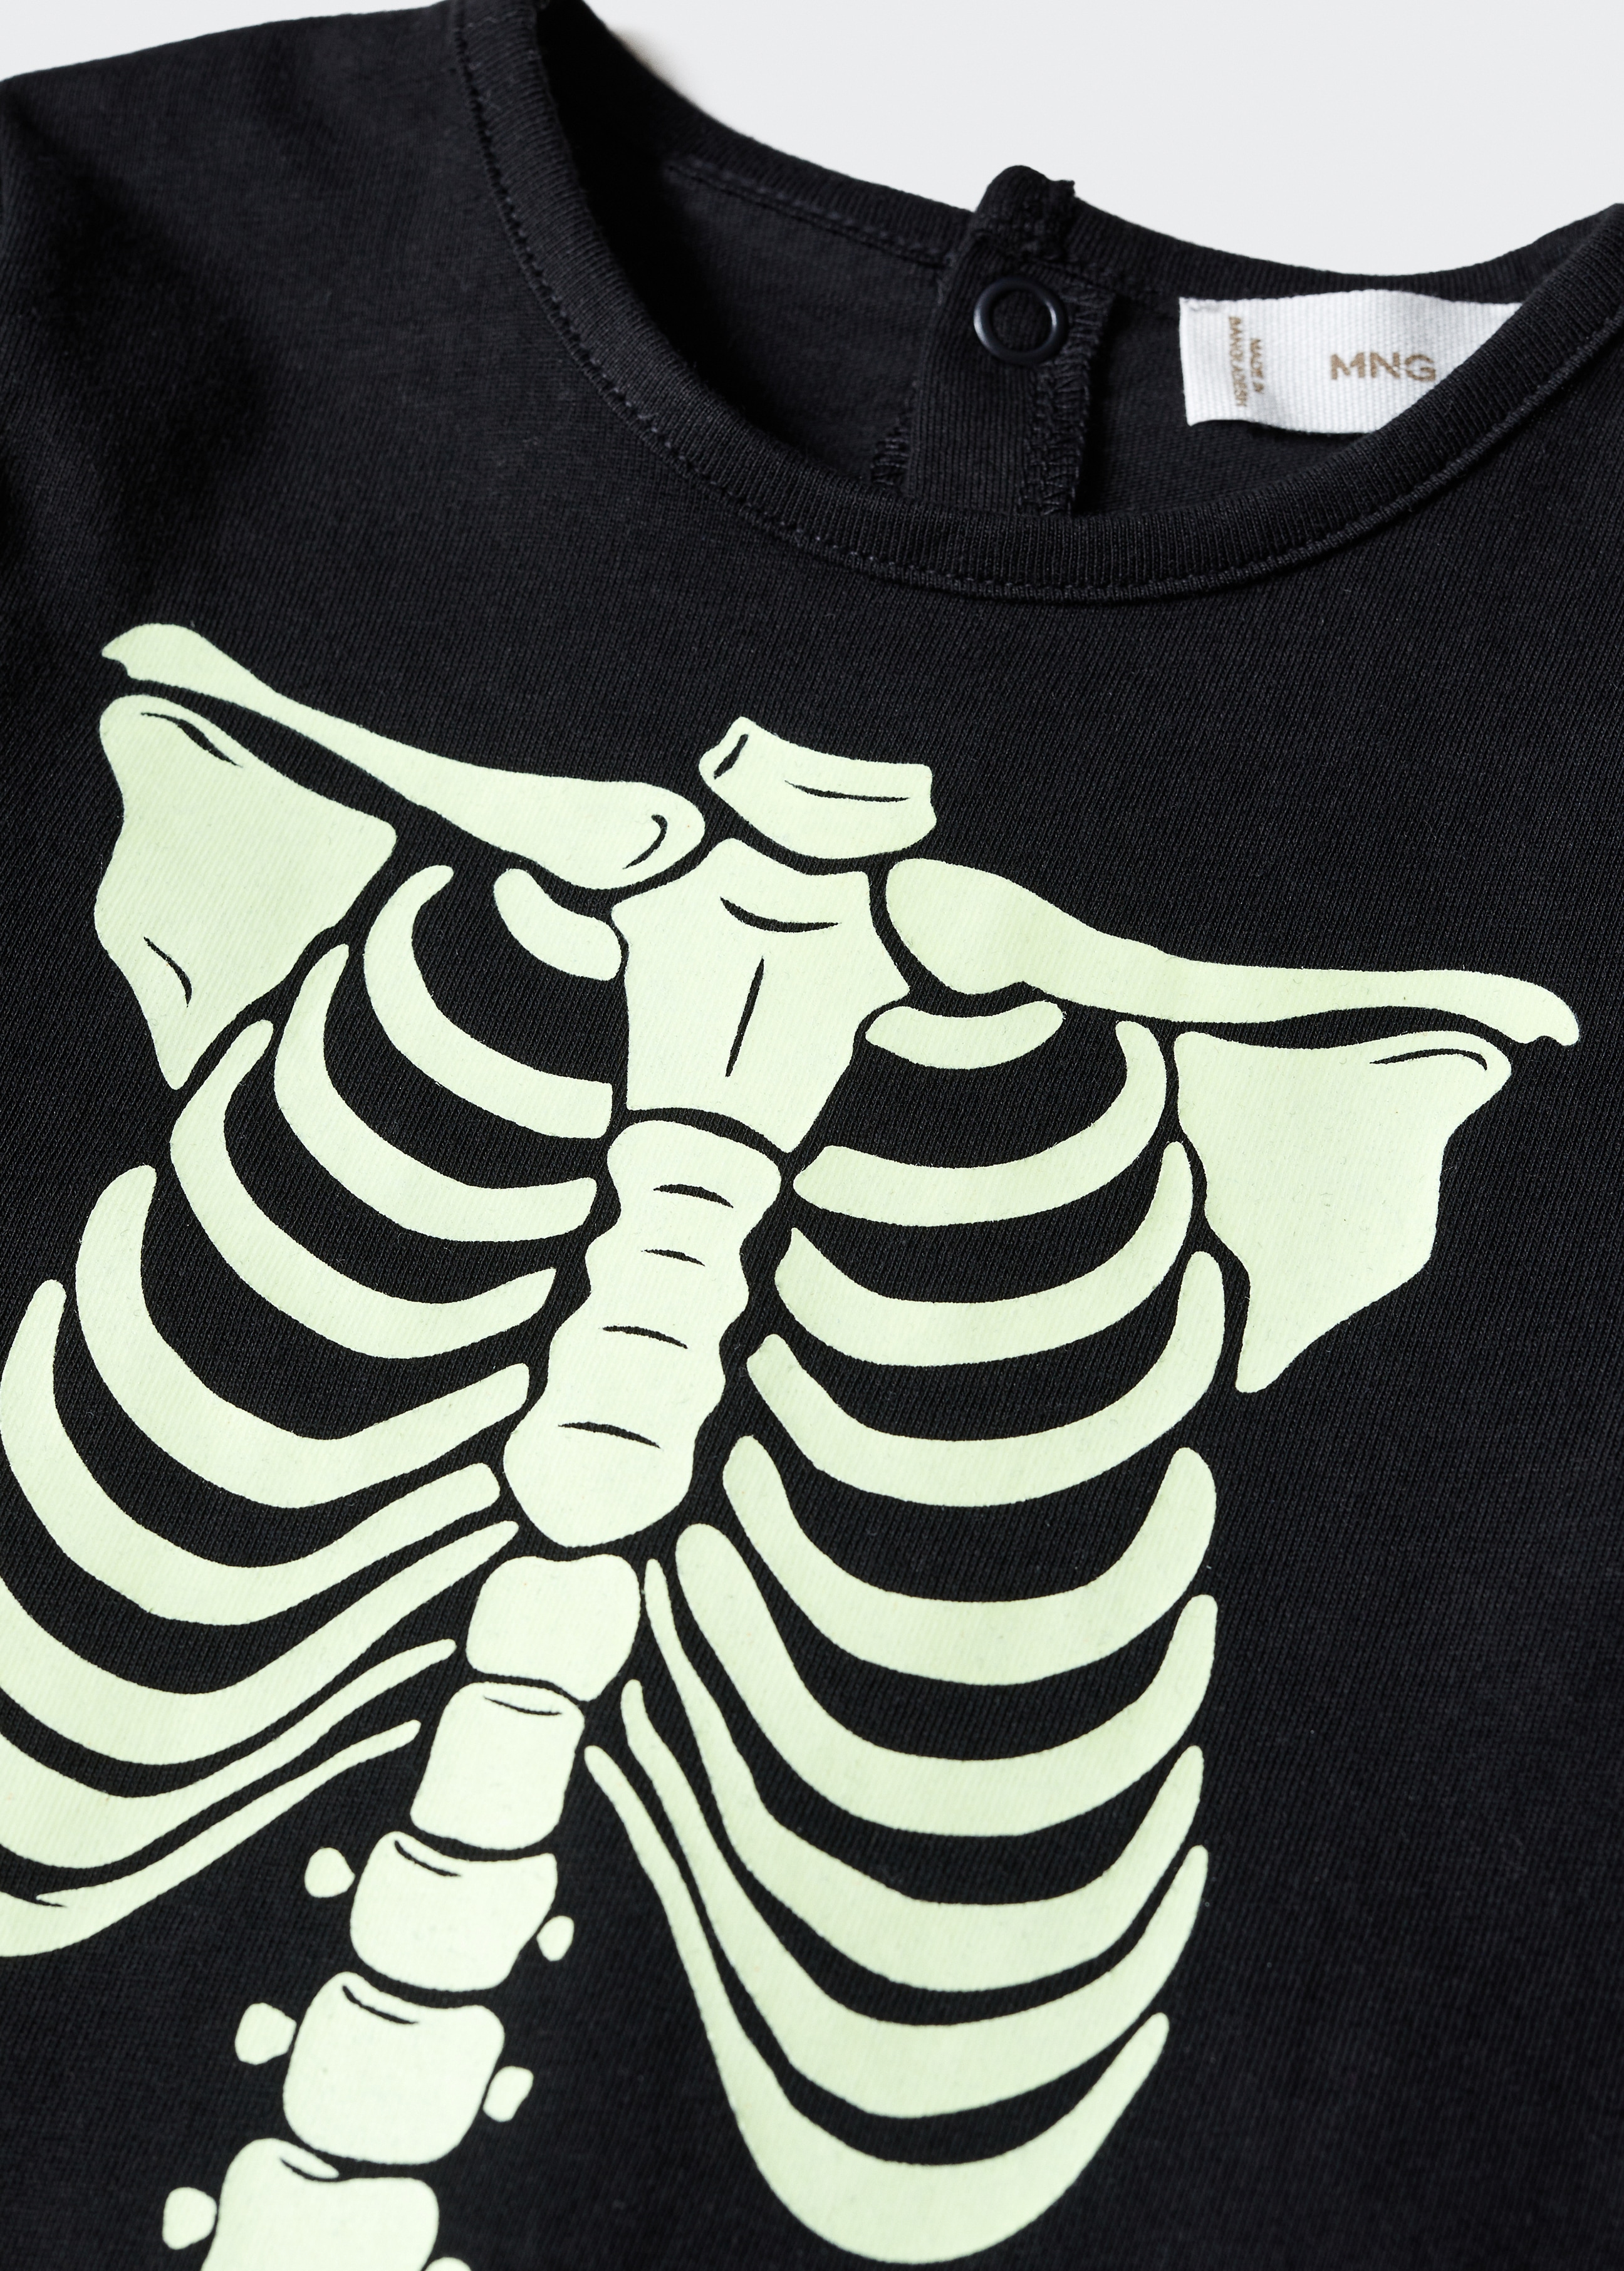 Glow in the dark skeleton pyjama - Details of the article 8